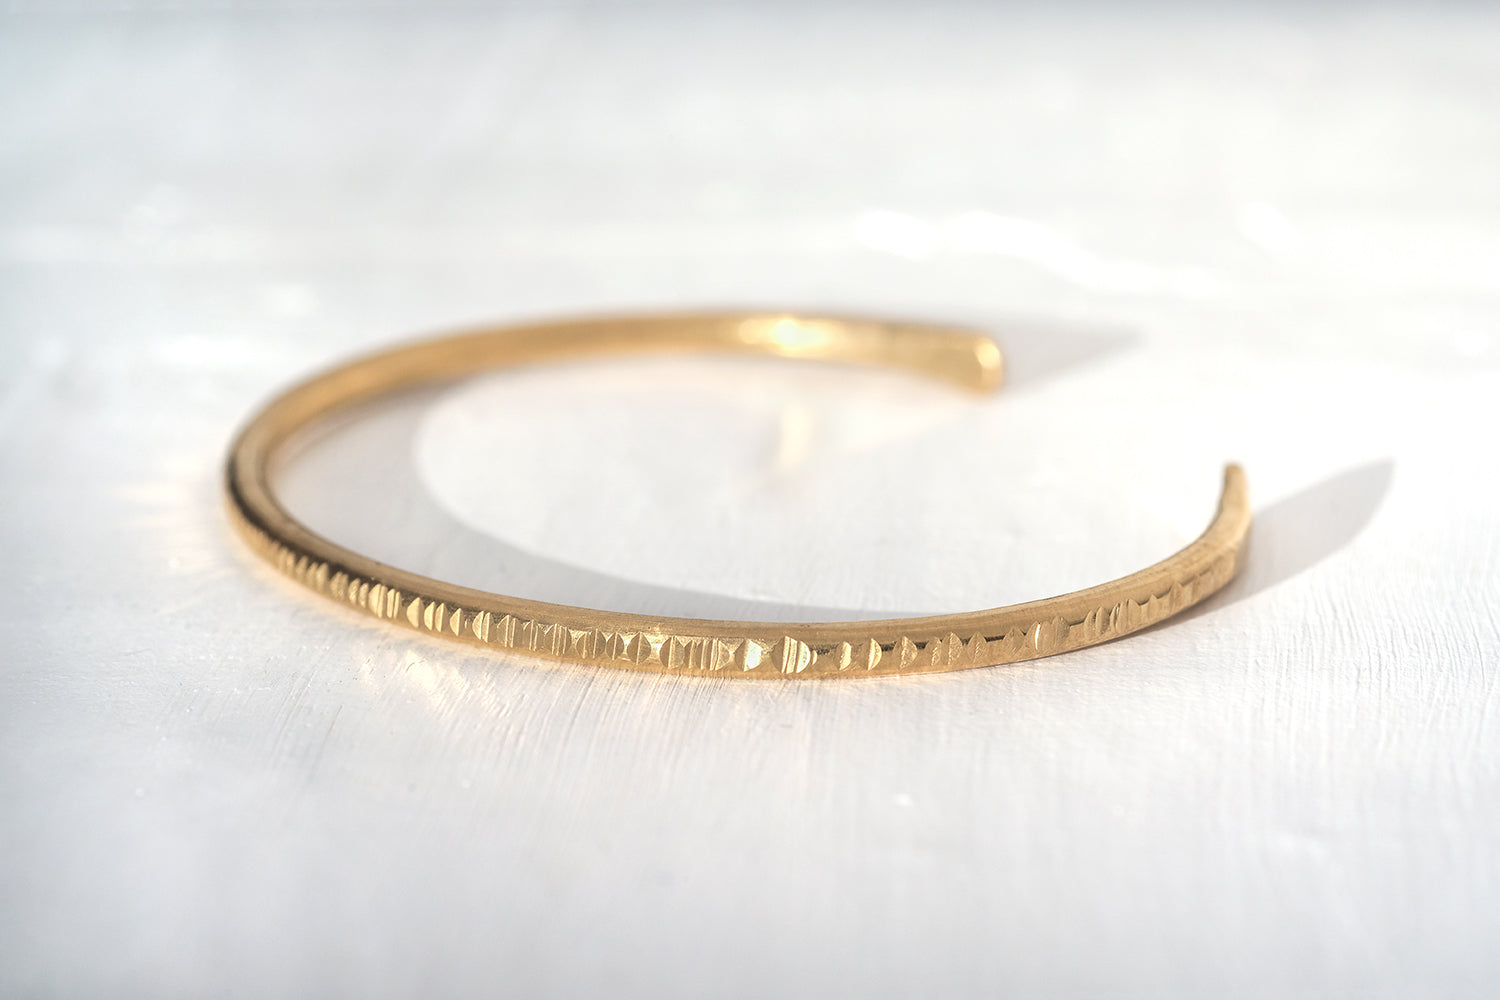 Thin Gold Bracelet For Men - With Grooves